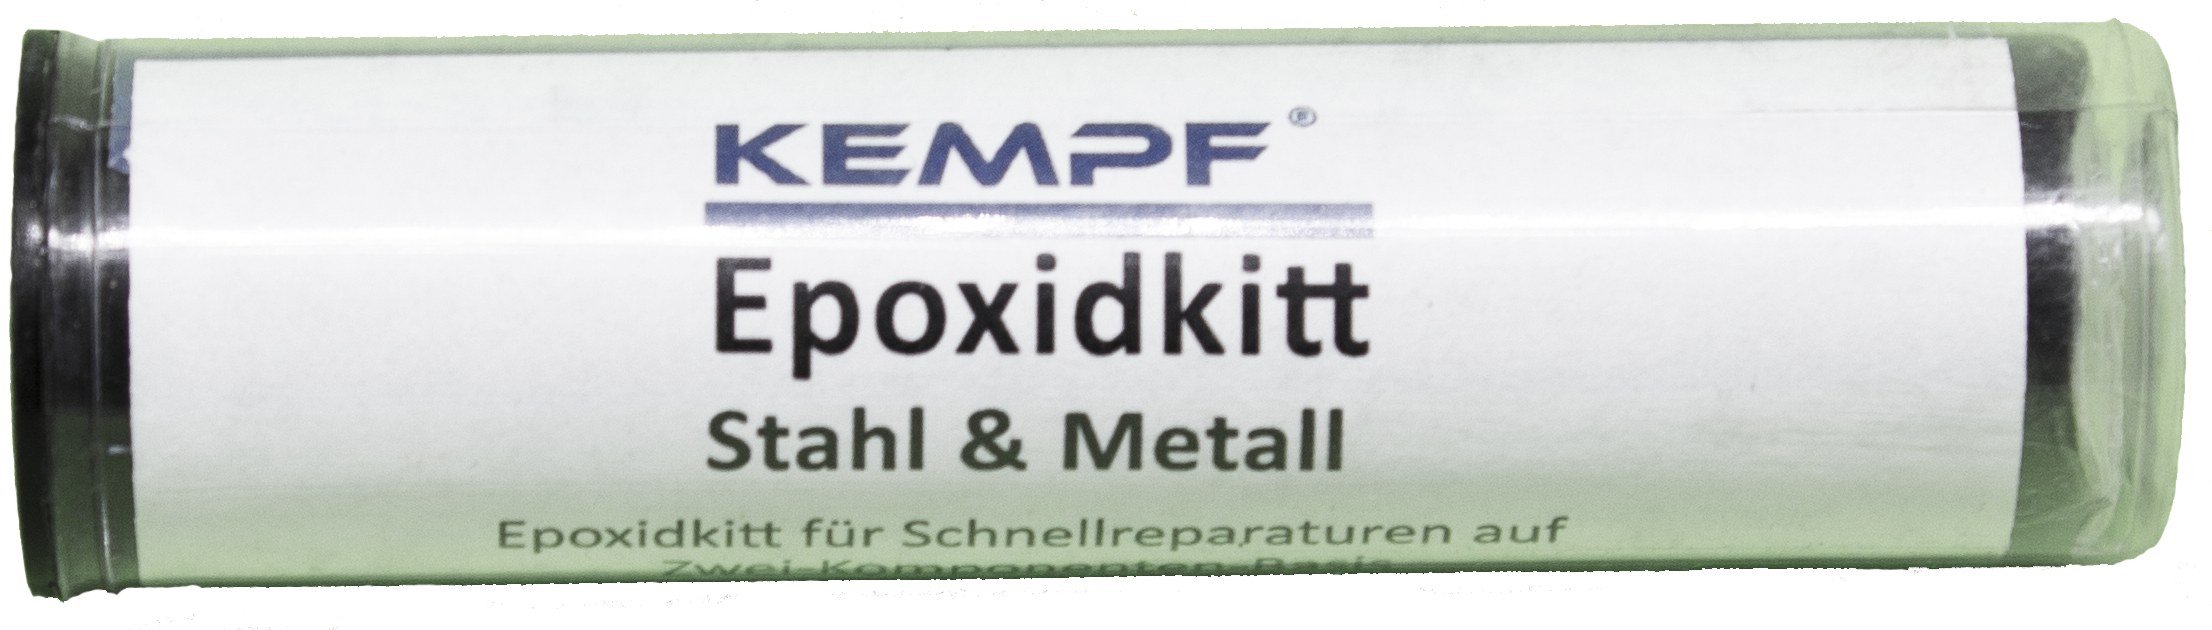 KEMPF Epoxidkitt